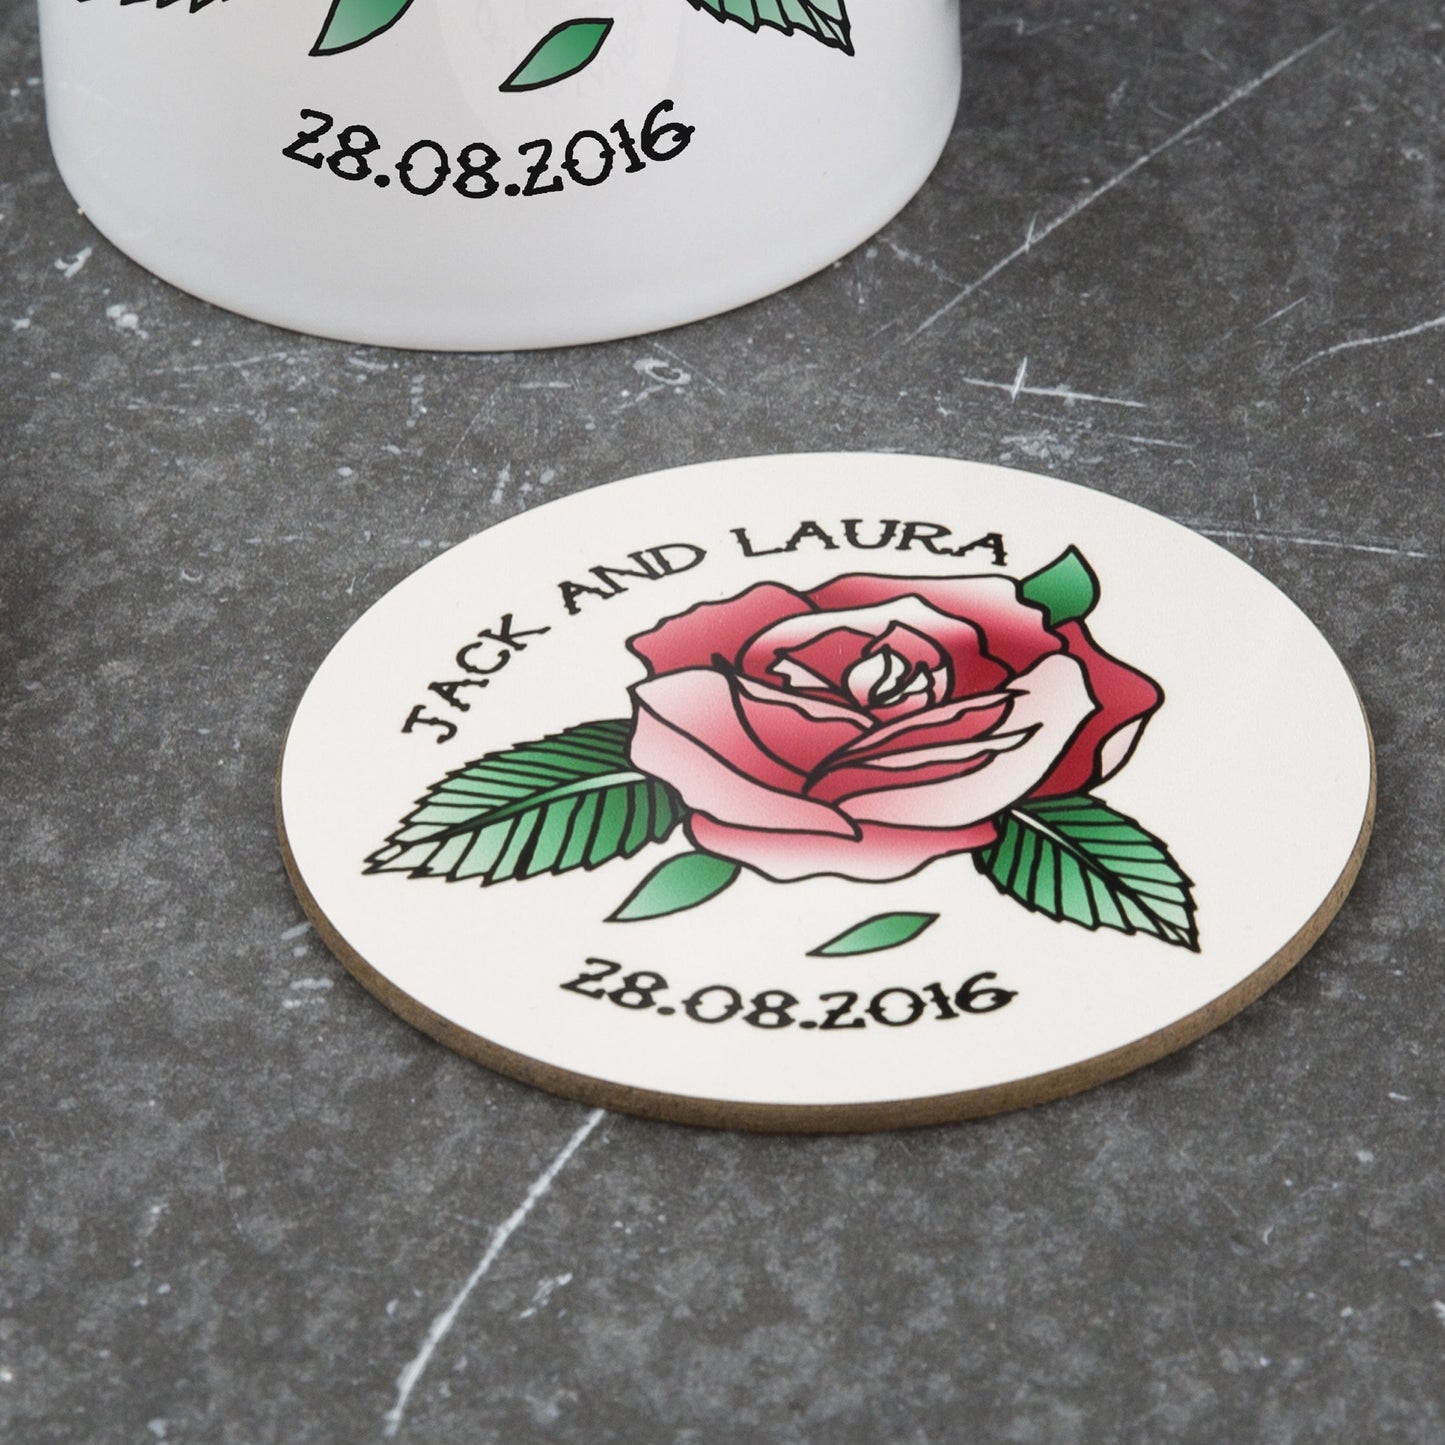 Wedding Favour Gift - Vintage Rose Tattoo Illustration Coaster Personalised - Anniversary Present